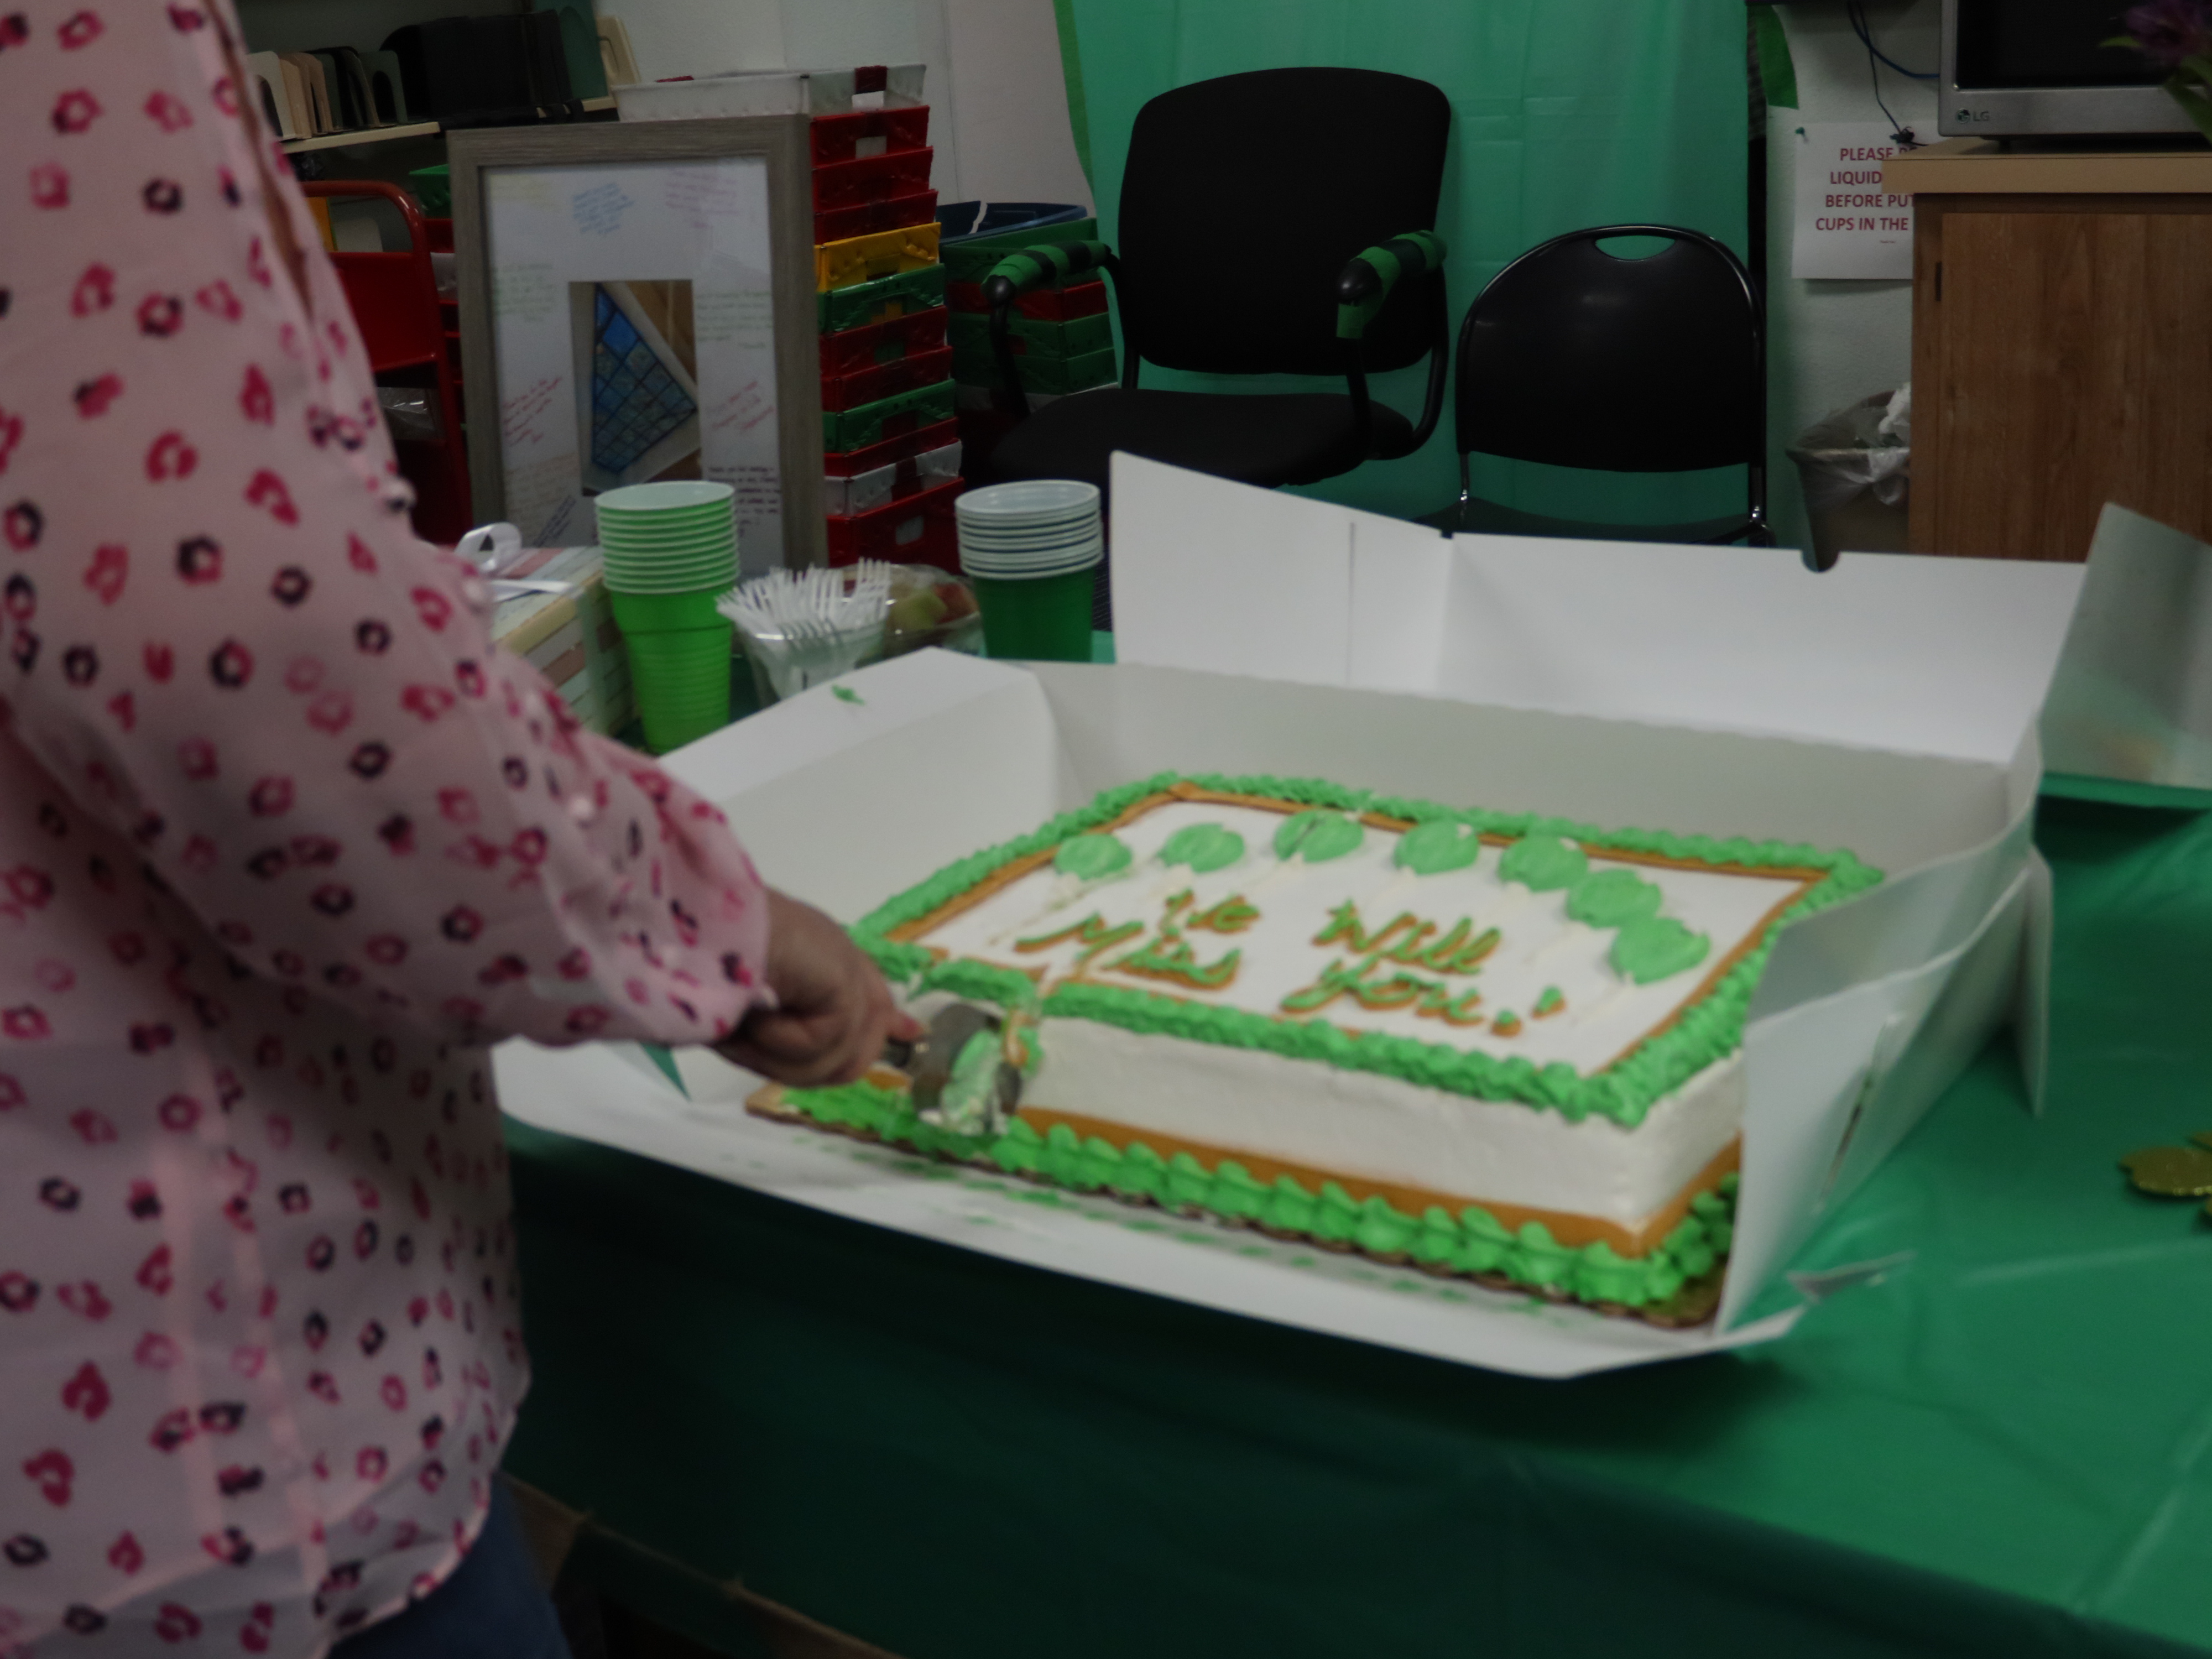 Celeste Bringard cutting her retirement cake